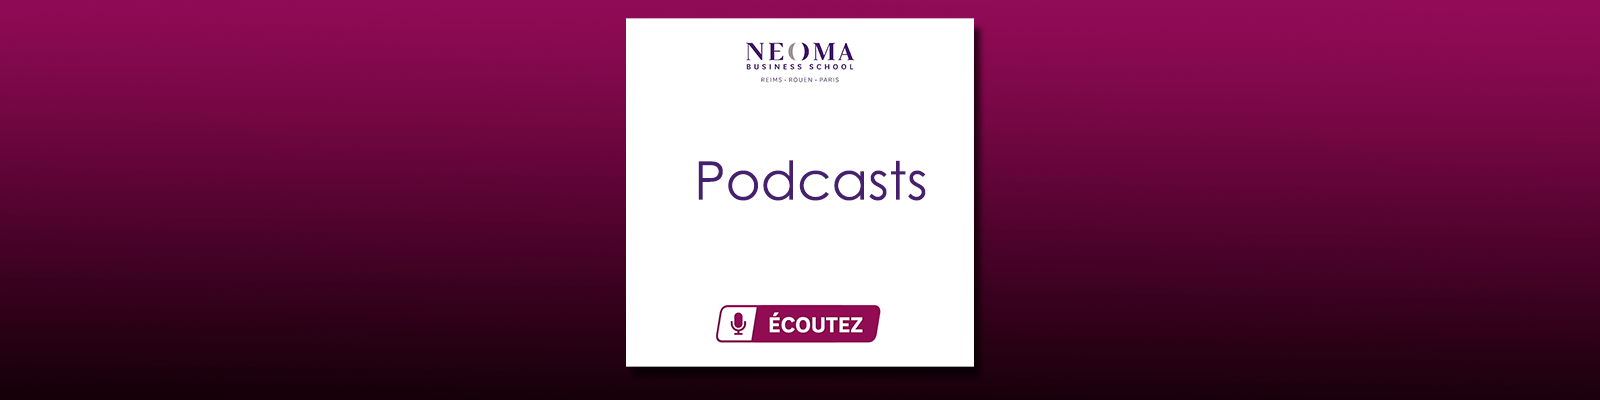 podcasts-NEOMA